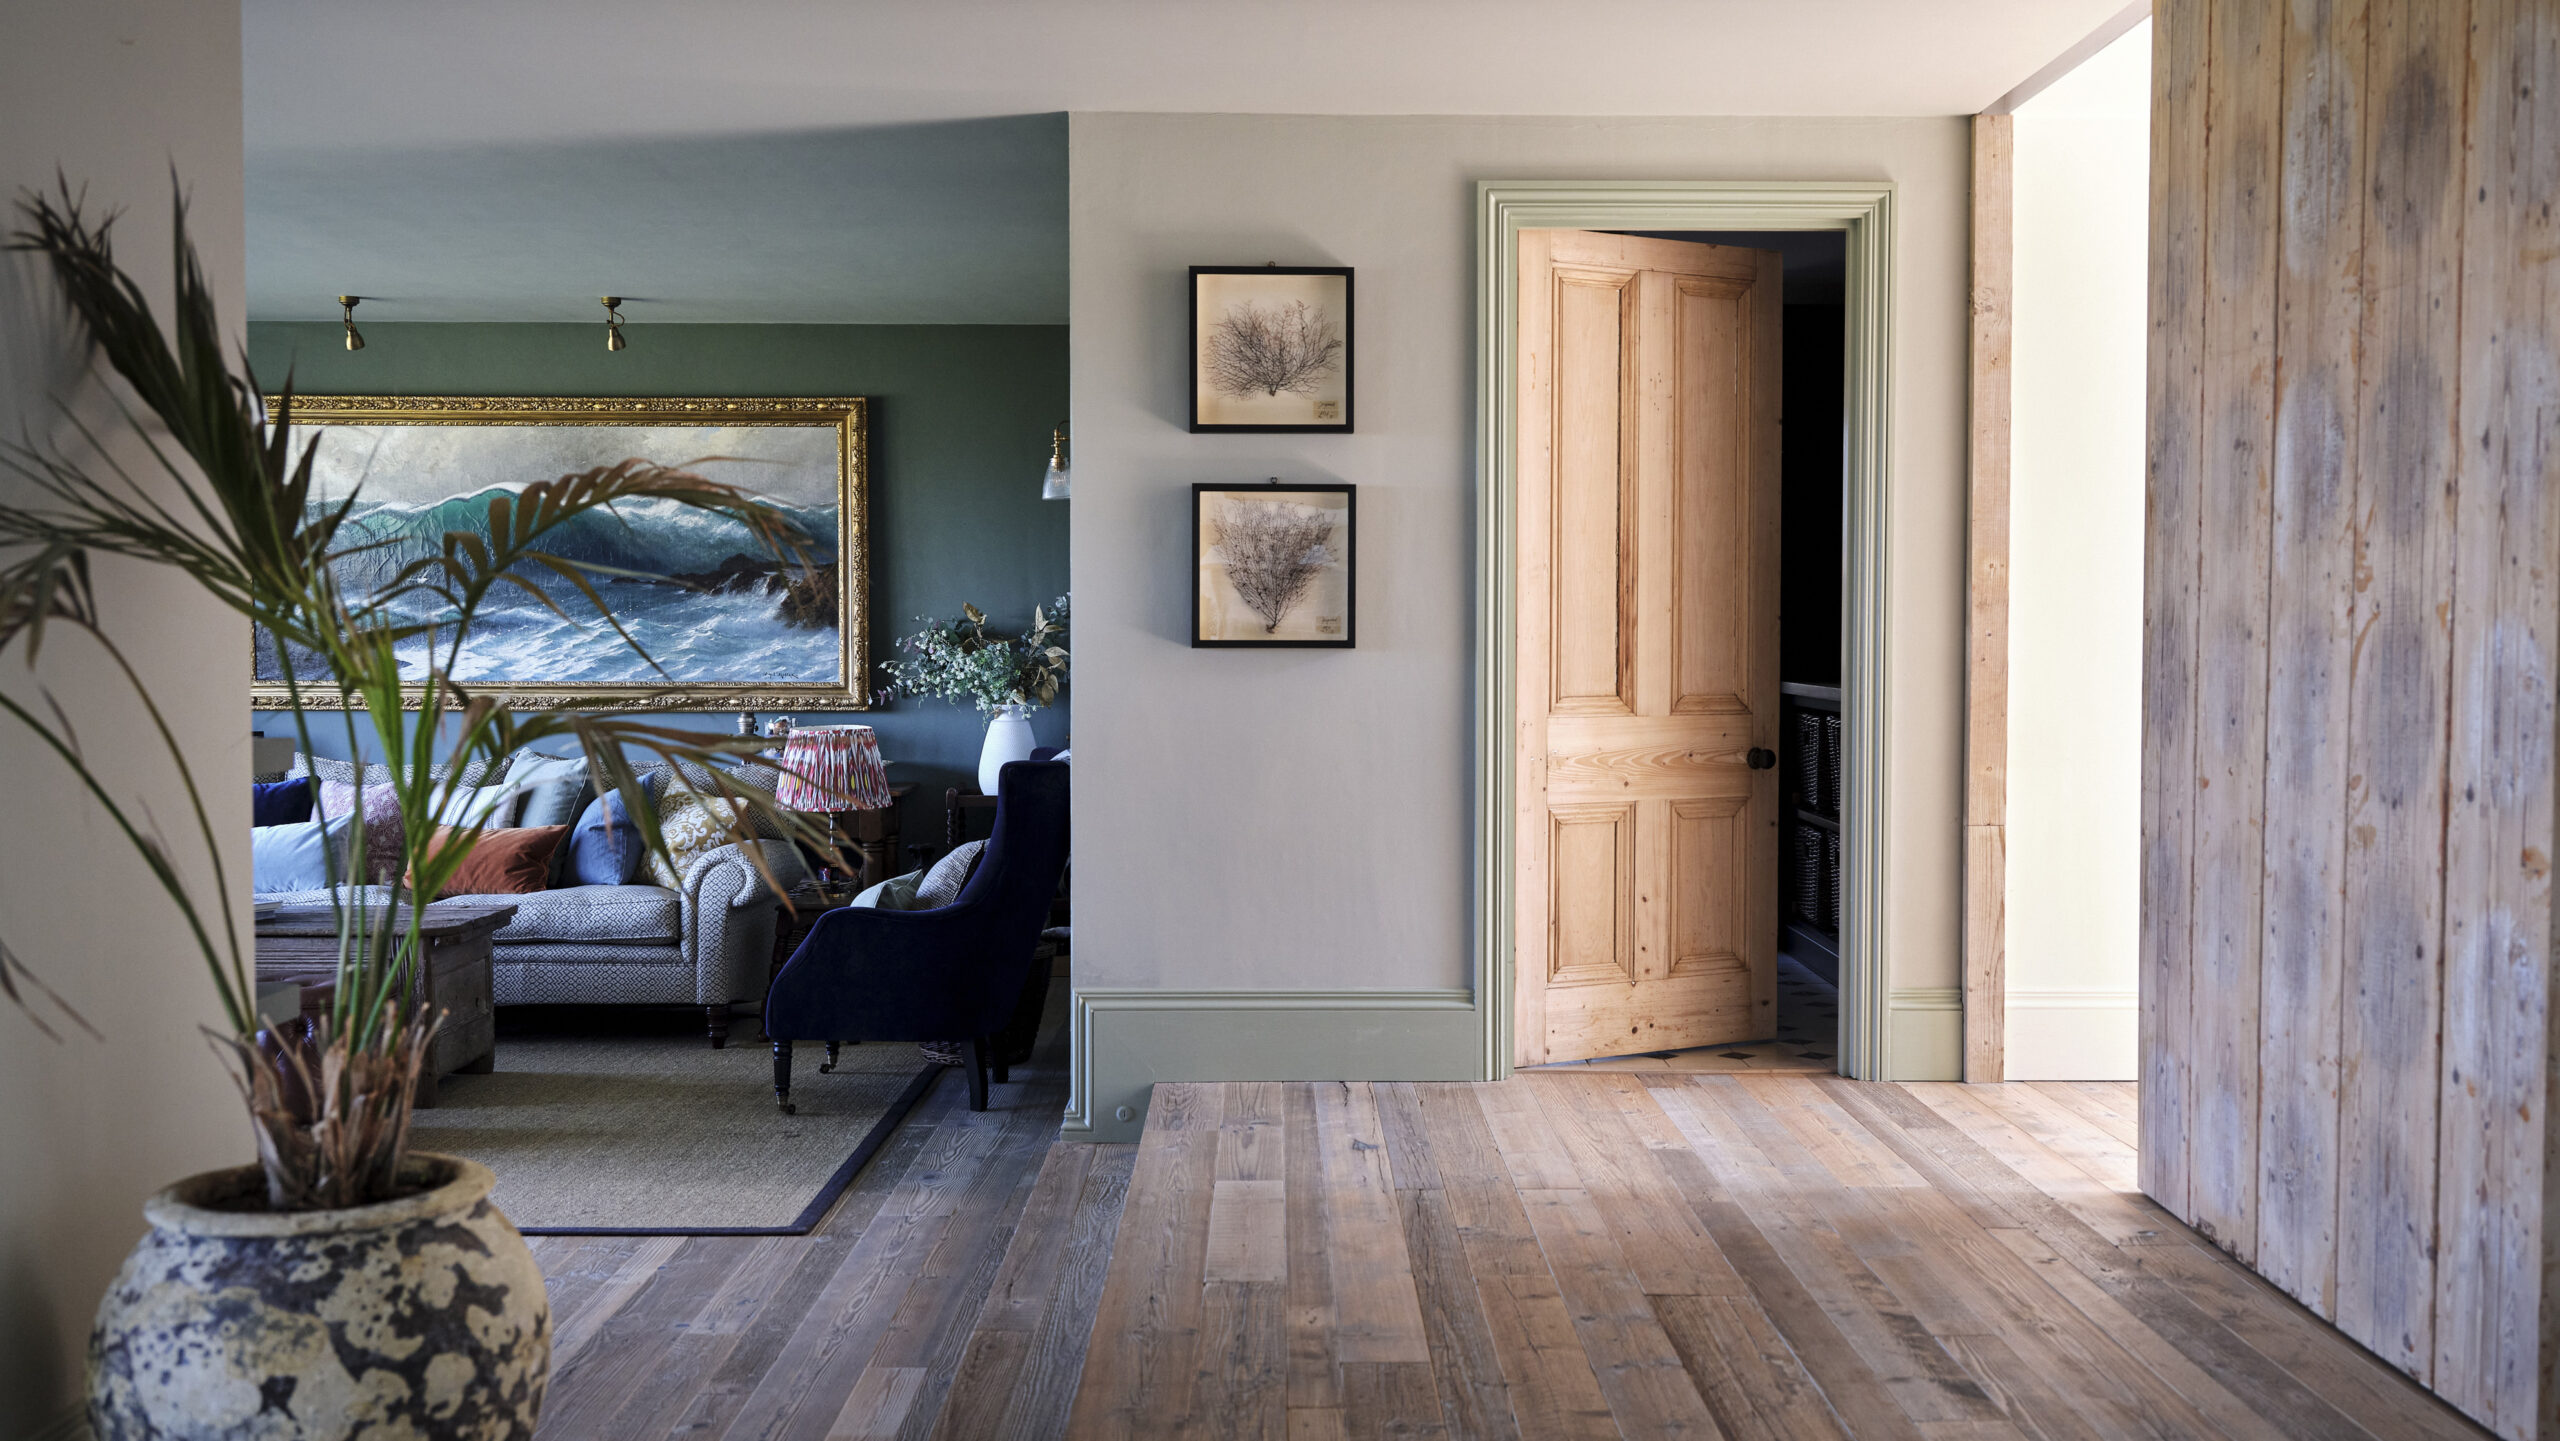 30 Simple Home Decor Ideas to Improve Your Interior